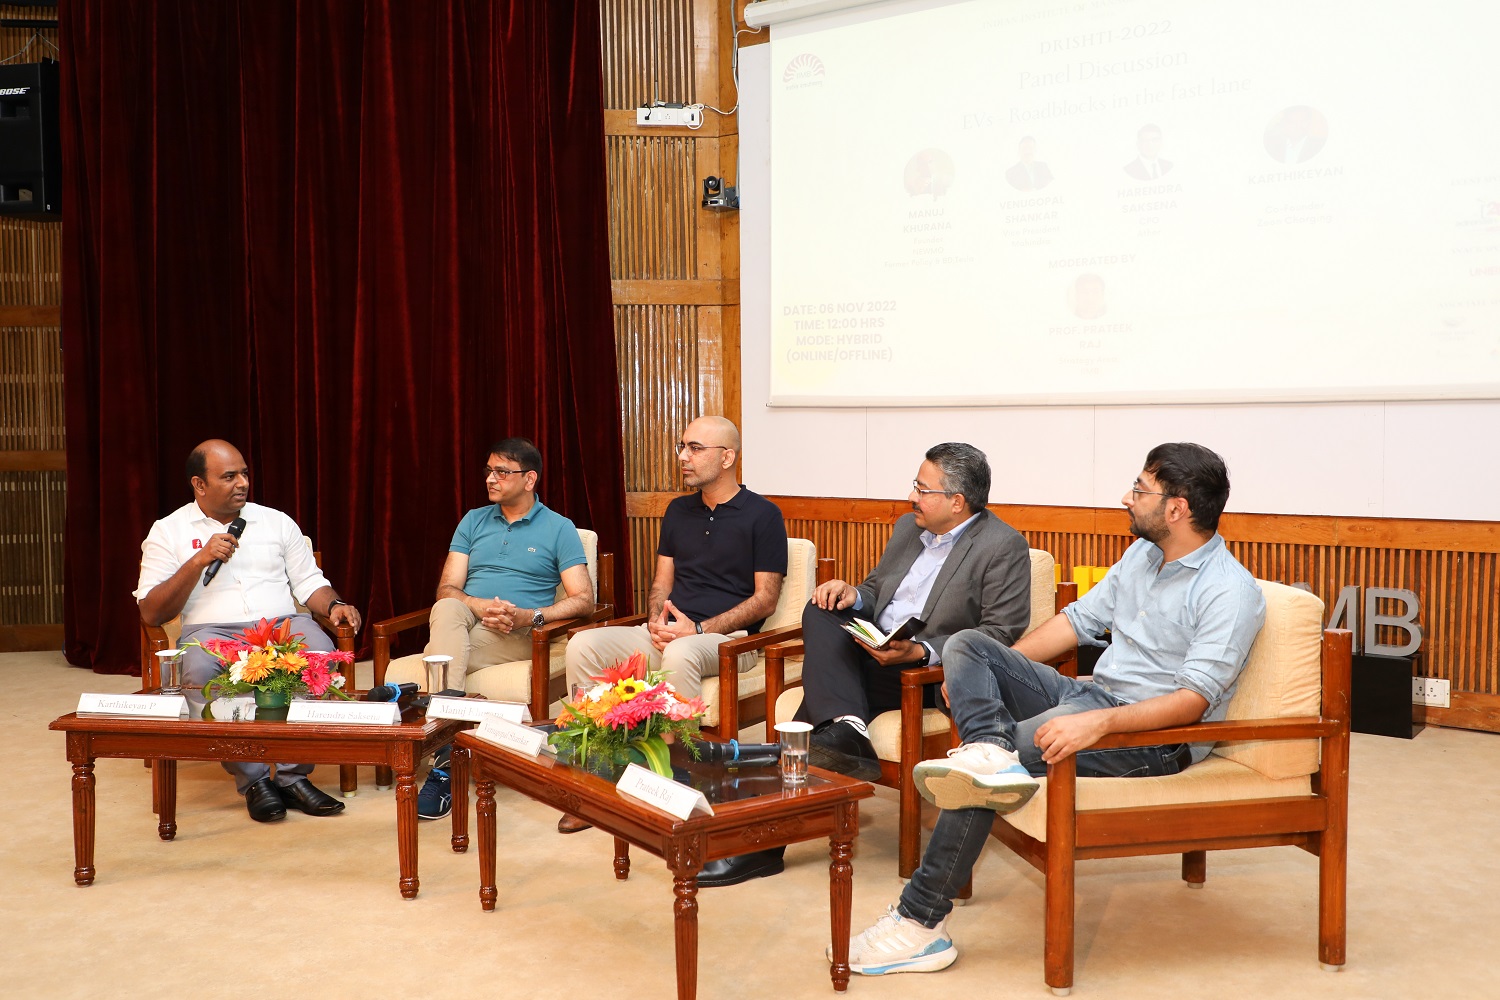 (L-R) Karthikeyan P, Co-Founder, Zeon Chargin; Harendra Saksena, CPO, Ather; Manuj Khurana, Founder, Newmo, Former Head of Policy and BD, Tesla India; Venugopal Shankar, VP, Mahindra, at the panel discussion on Evs - Roadblocks in The Fast Lane at Drishti 2022.